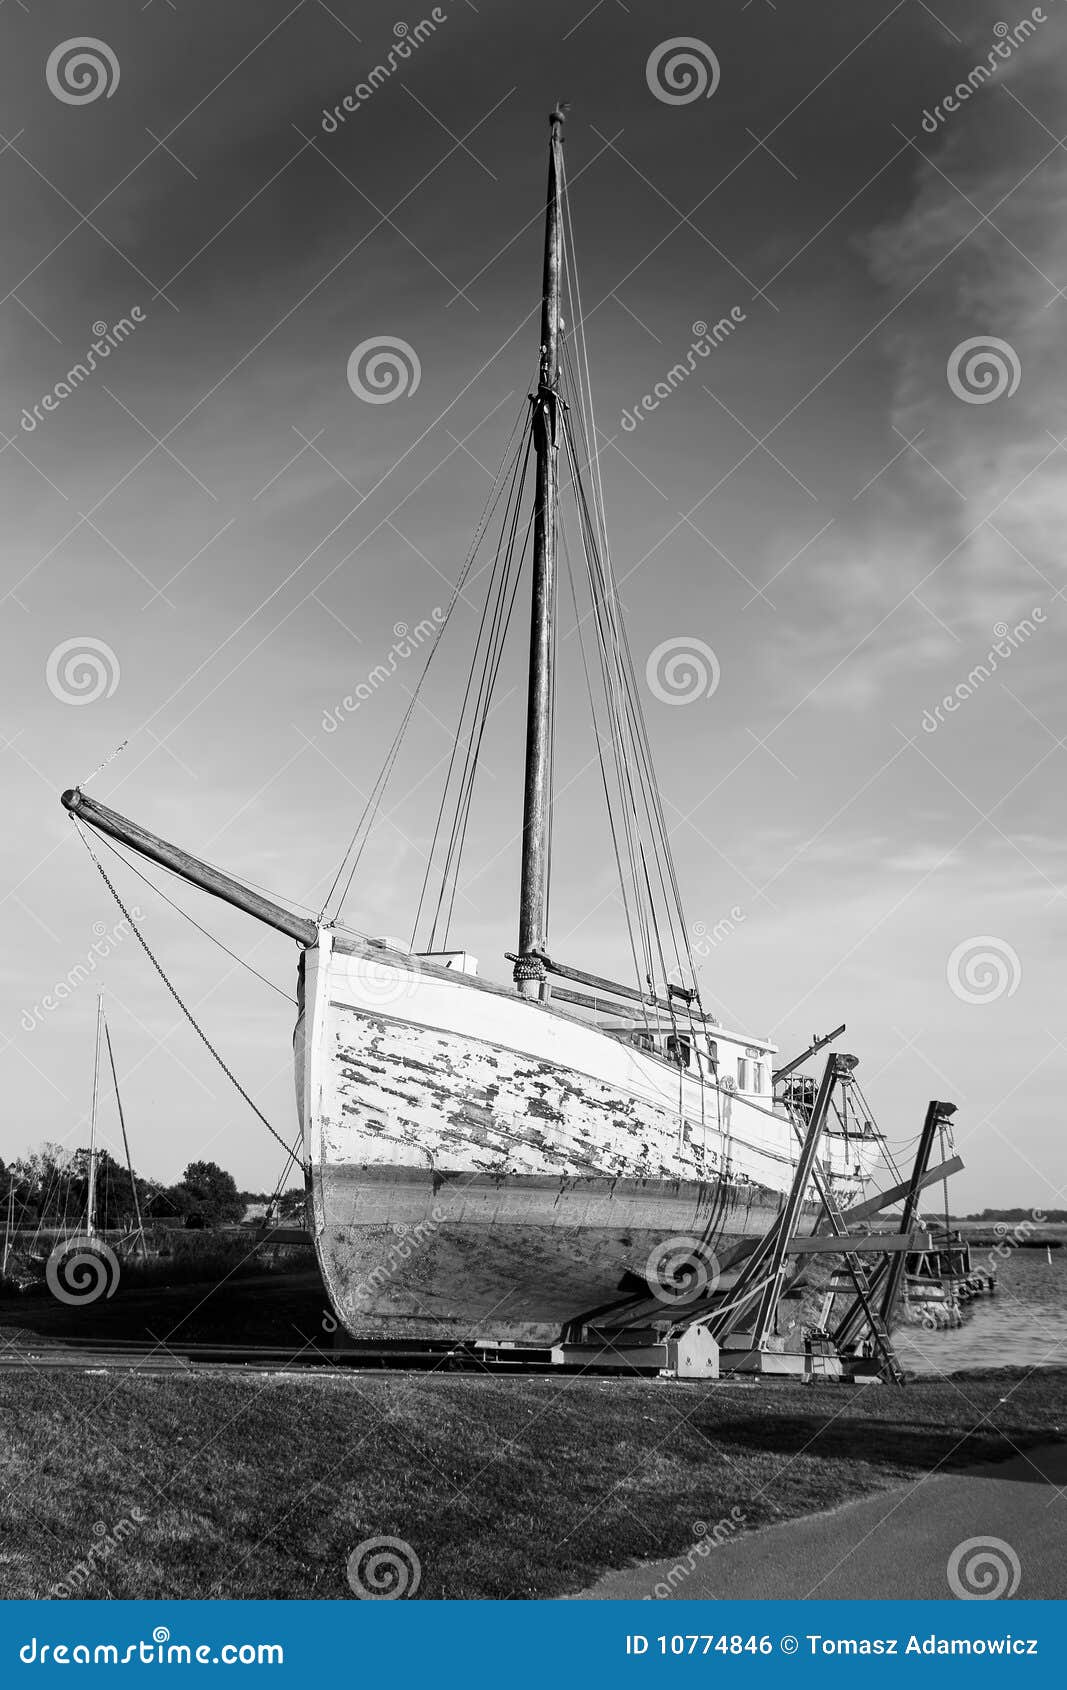 vintage sailboat pictures